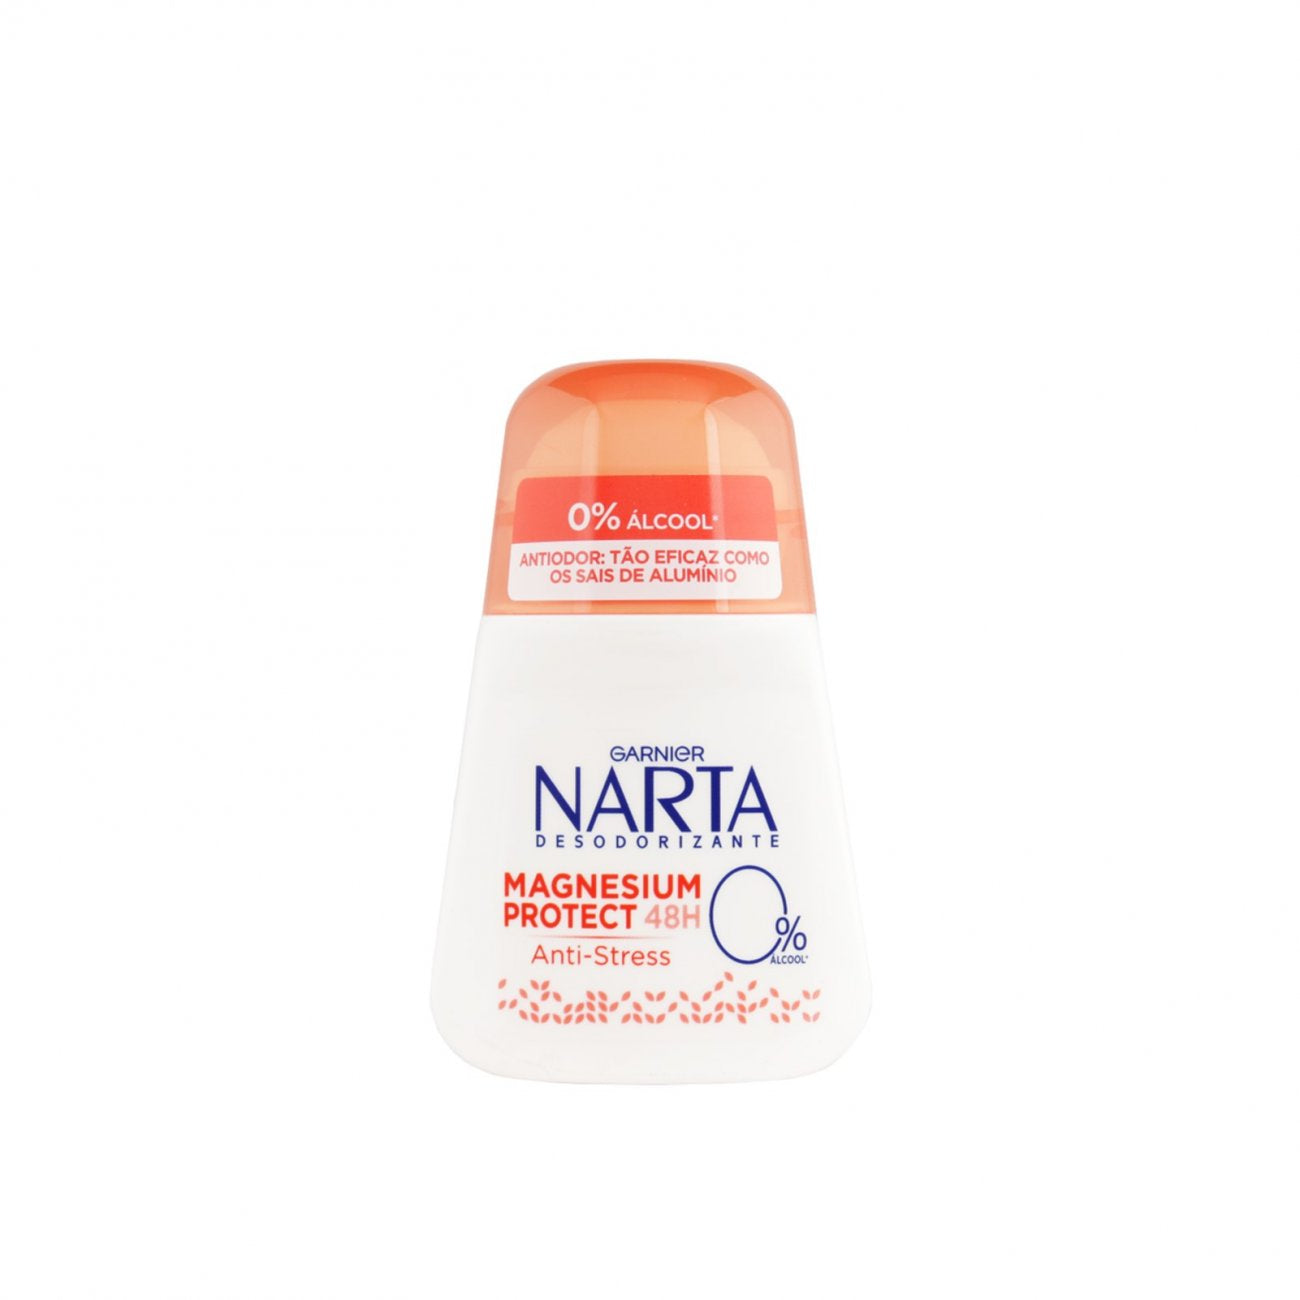 Narta Magnesium Protect 48h Anti-Stress Deodorant Roll-On 50ml